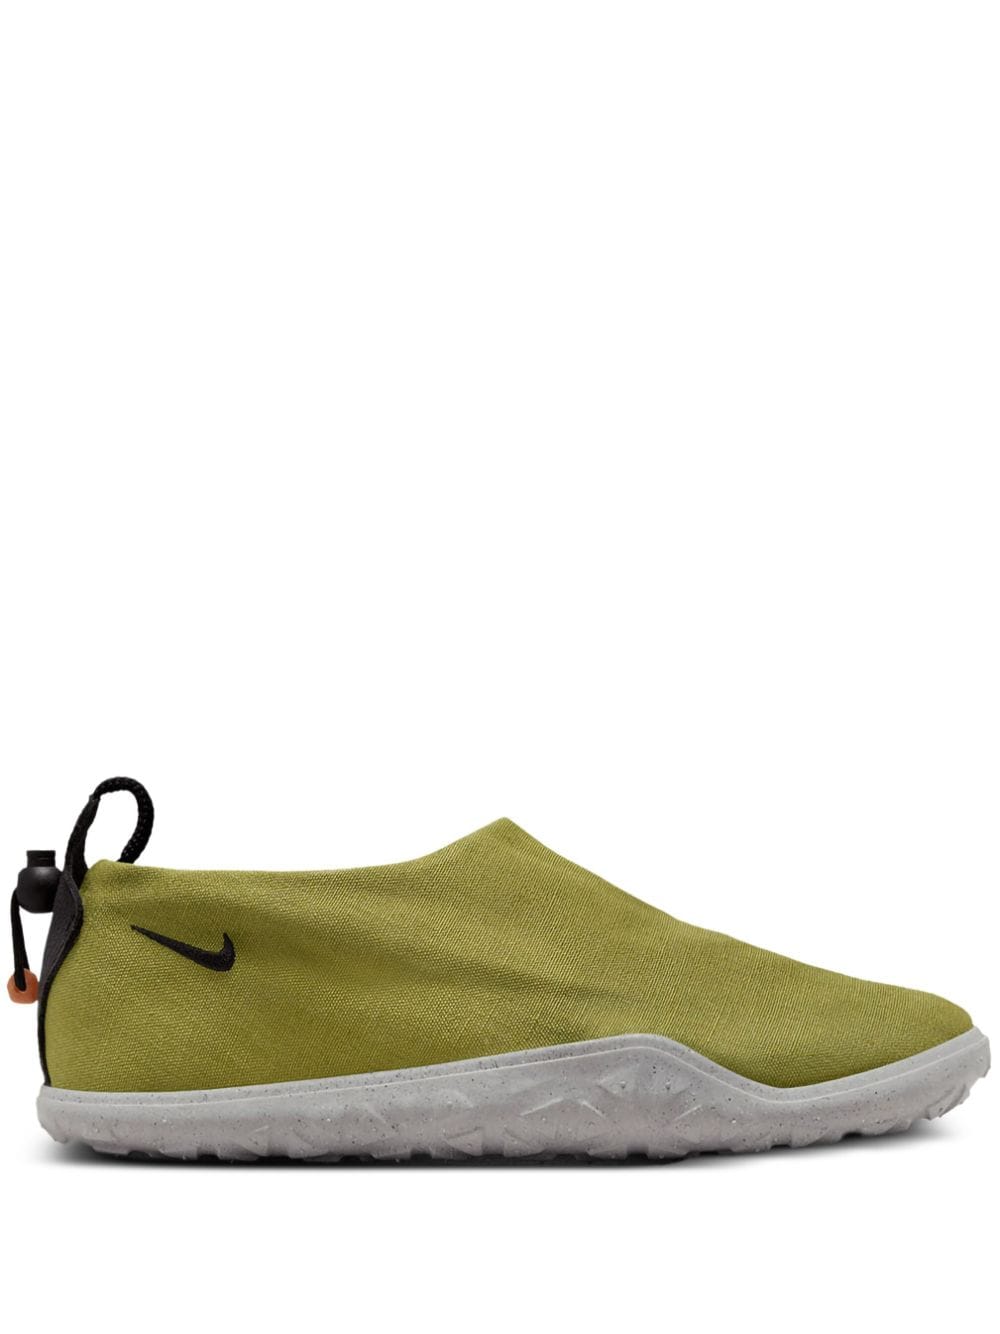 Nike Sneakers ACG Moc senza lacci - Verde